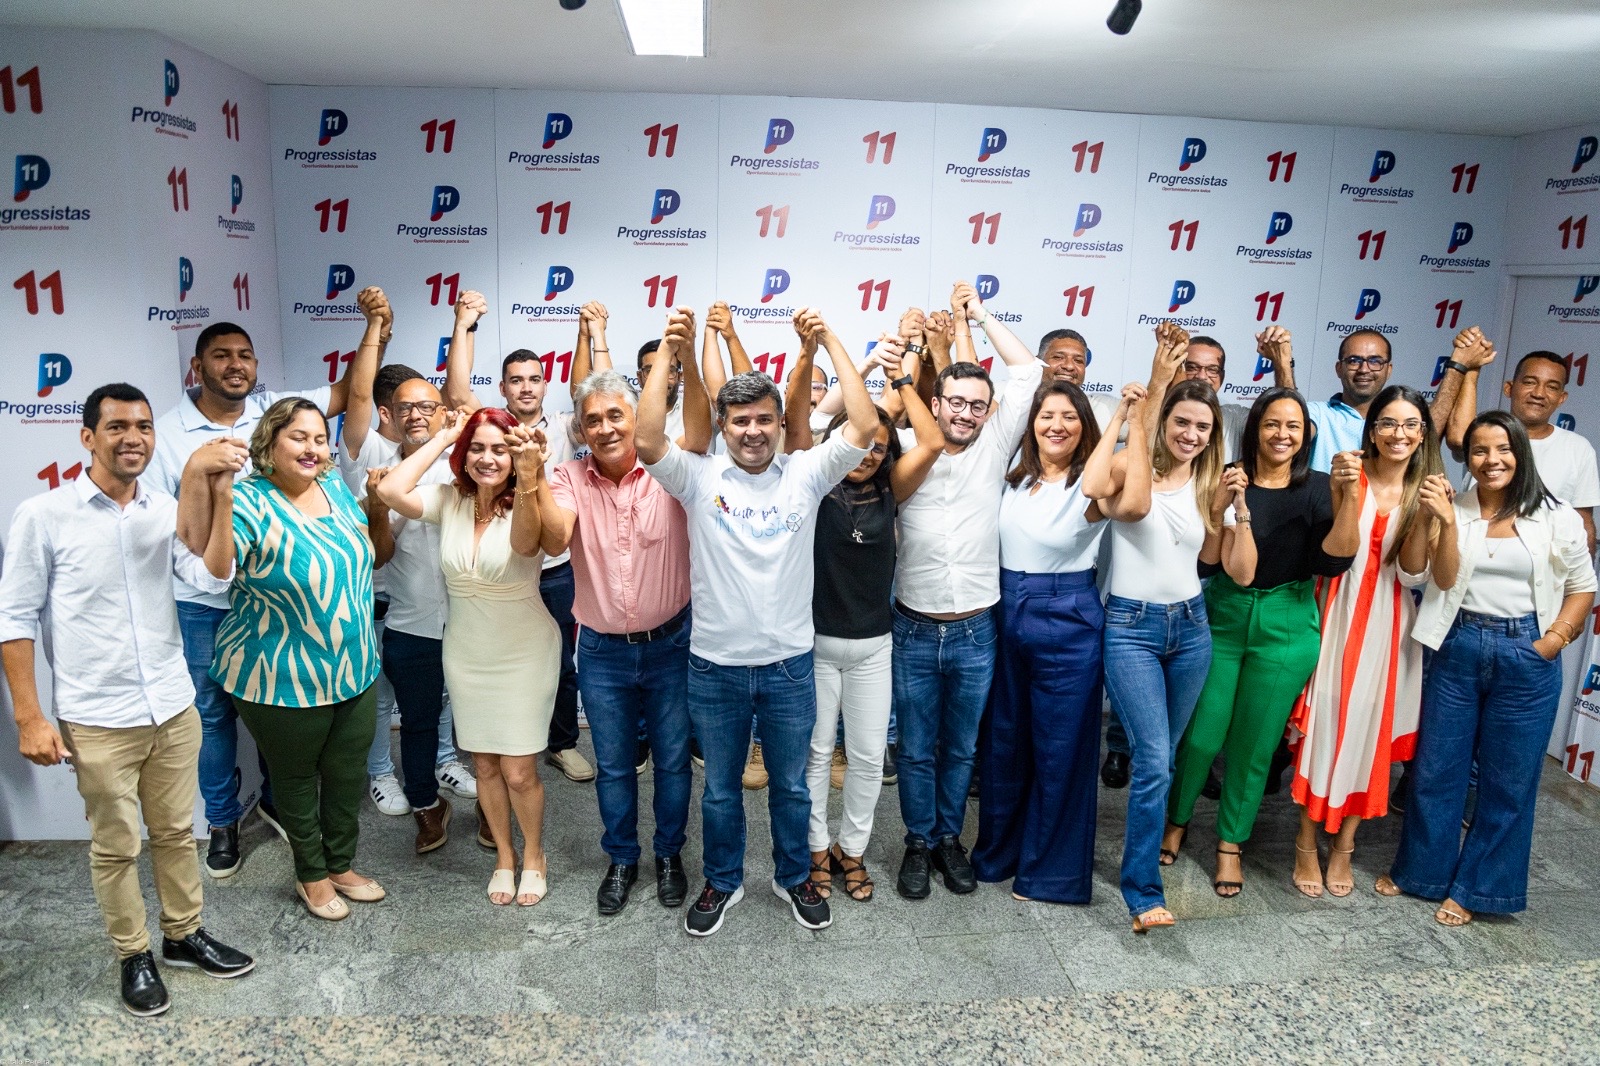 Prefeito de Moreno, Edmílson Cupertino, traz novos vereadores para o PP e consolida a maior frente política da história da cidade